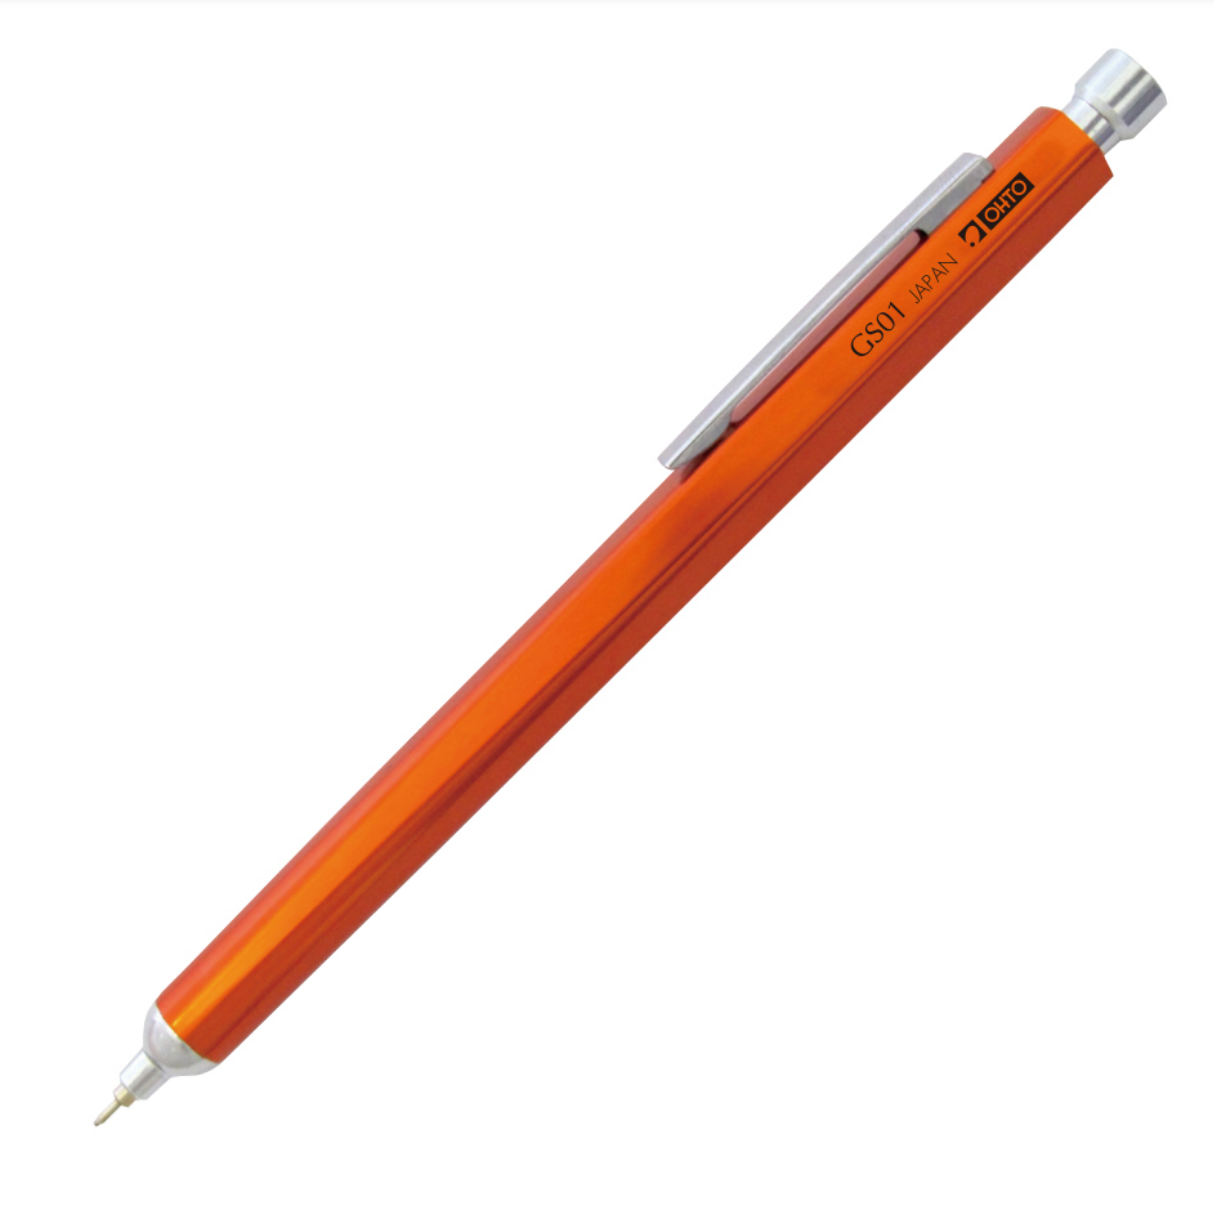 Horizon Pen - GS01 S7